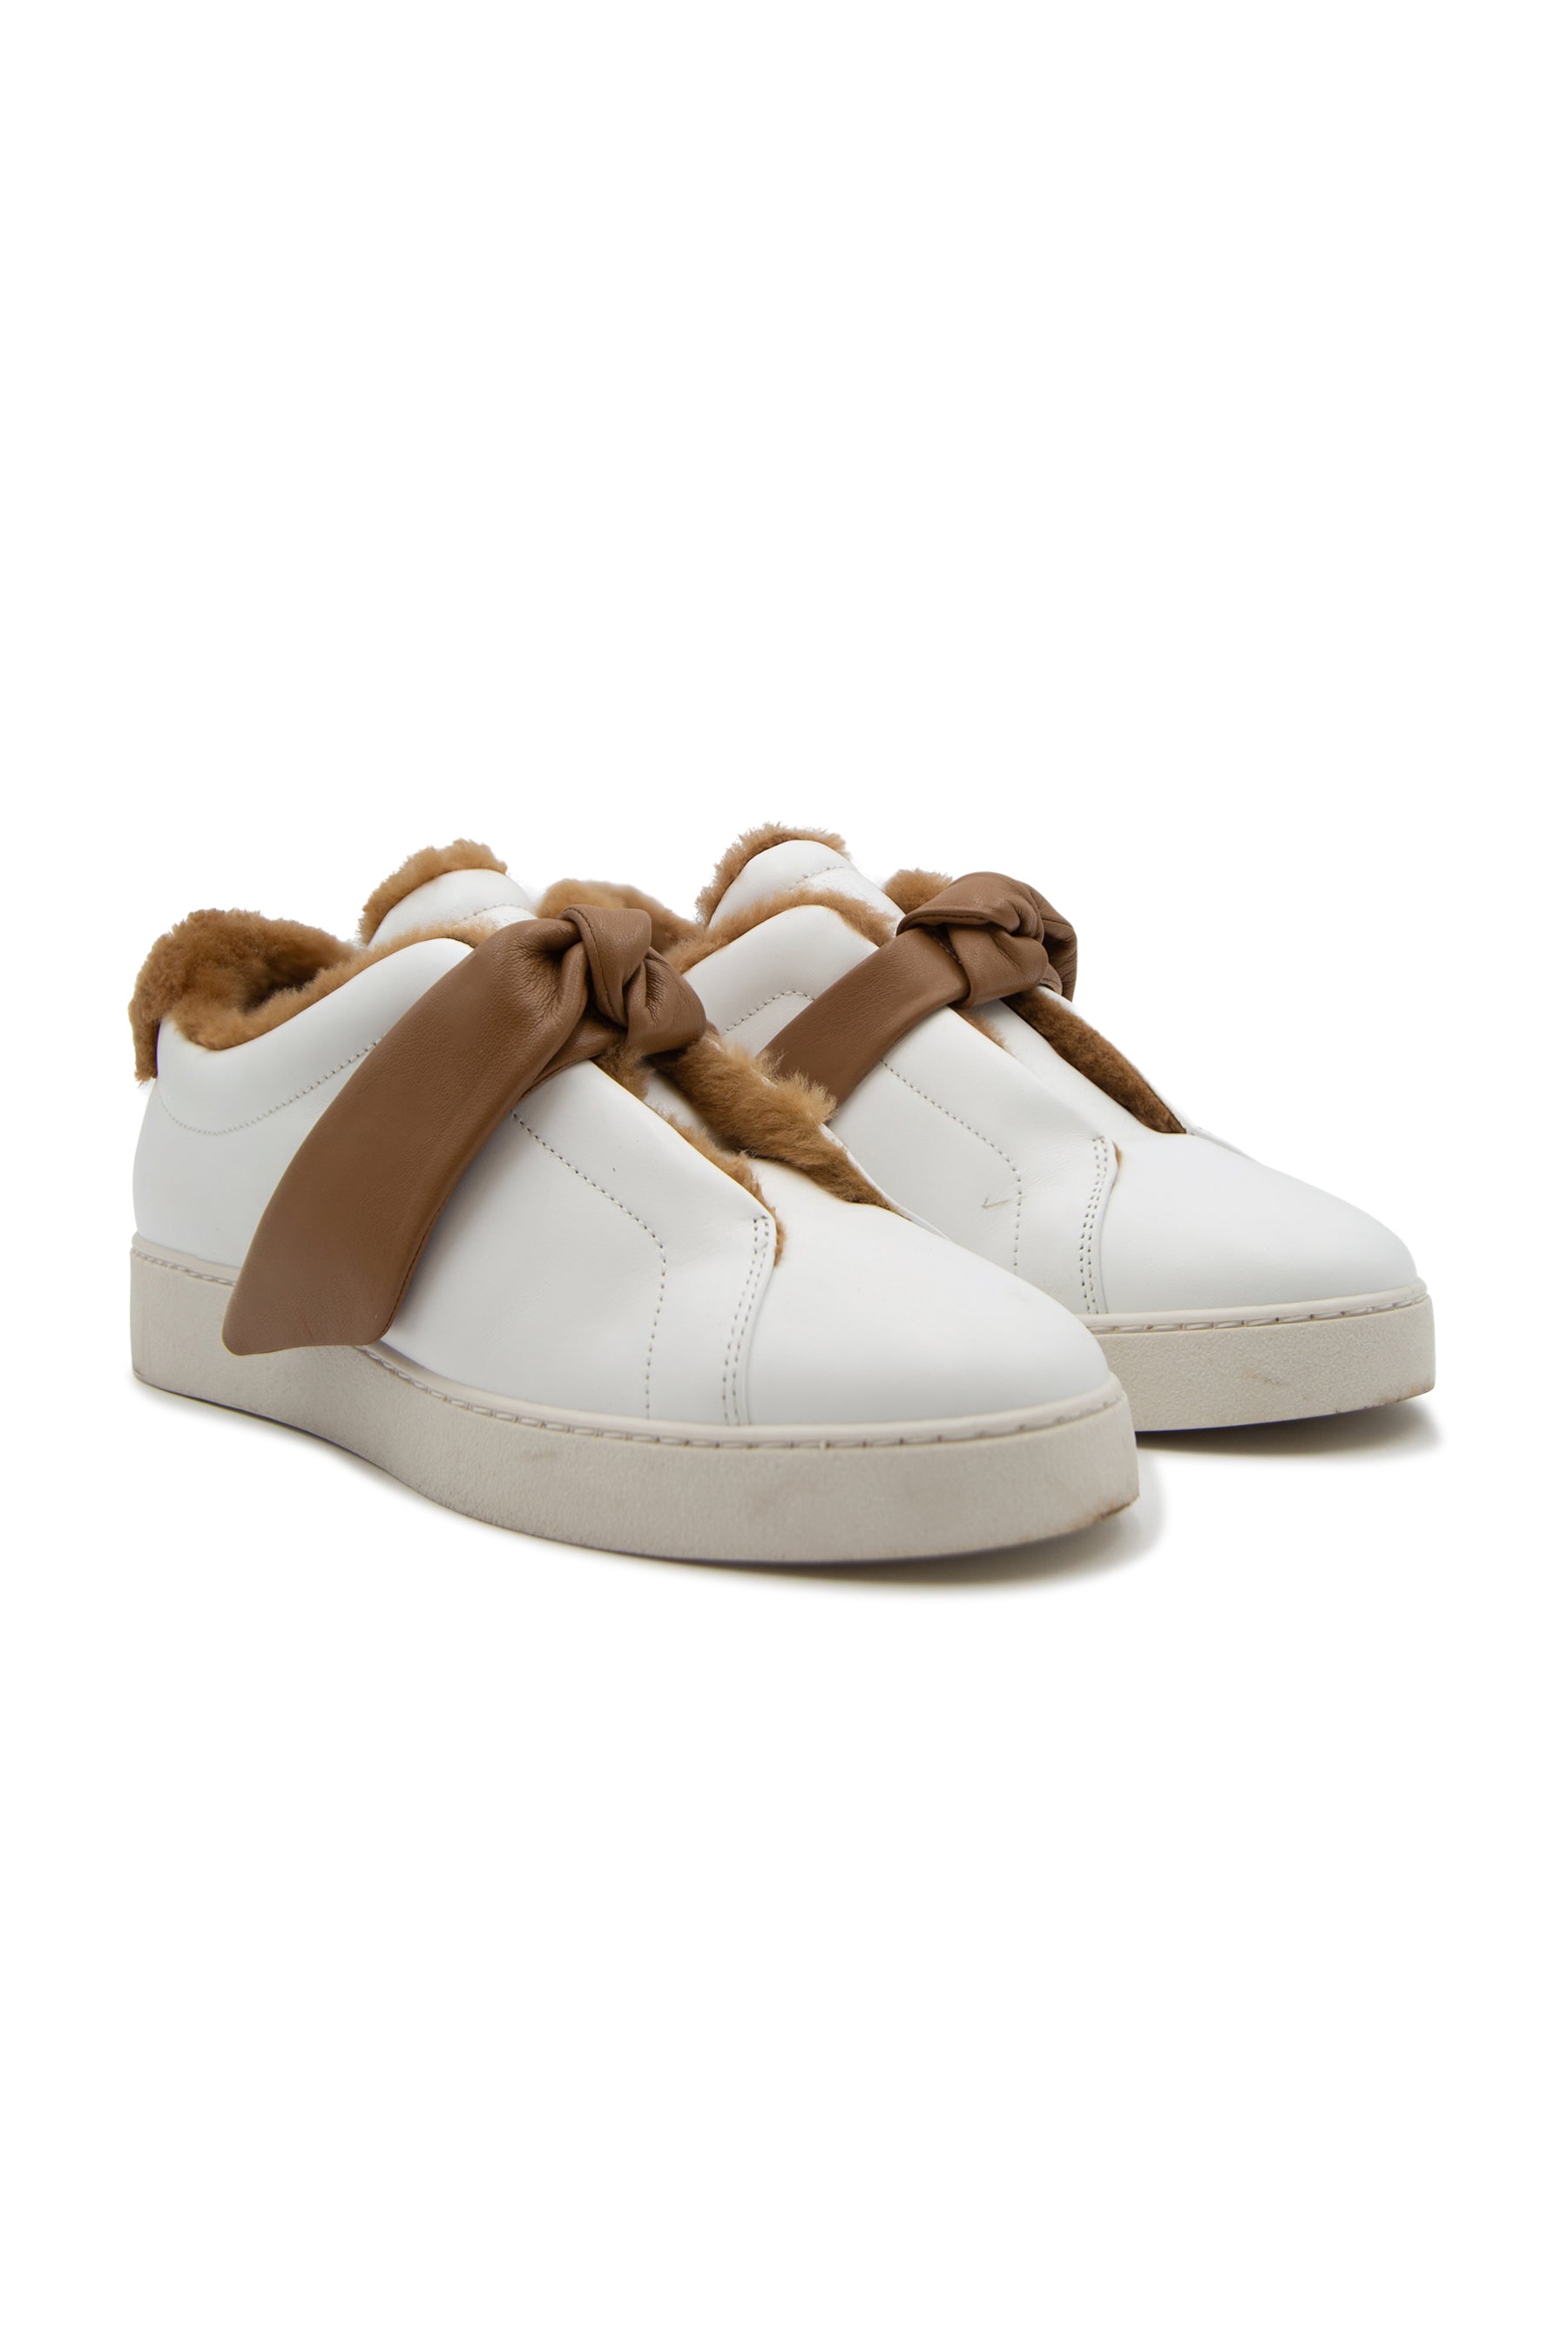 Alexandre Birman Asymmetric Clarita Leather Slip-On Sneakers